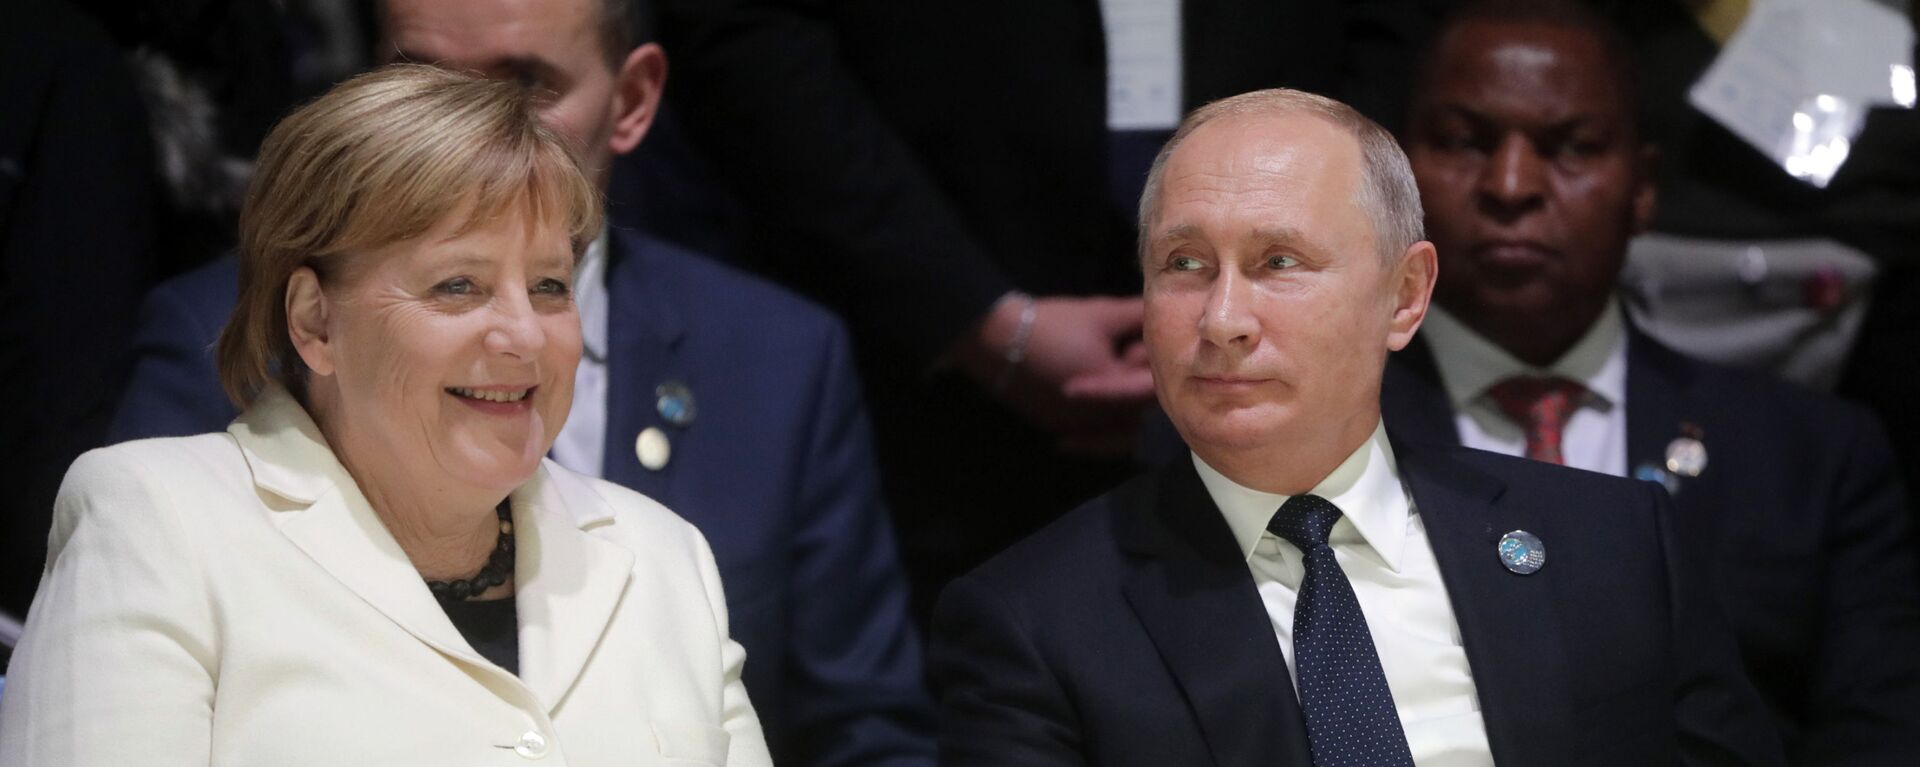 Putin și Merkel, la Forumul Păcii - Sputnik Moldova, 1920, 22.06.2021